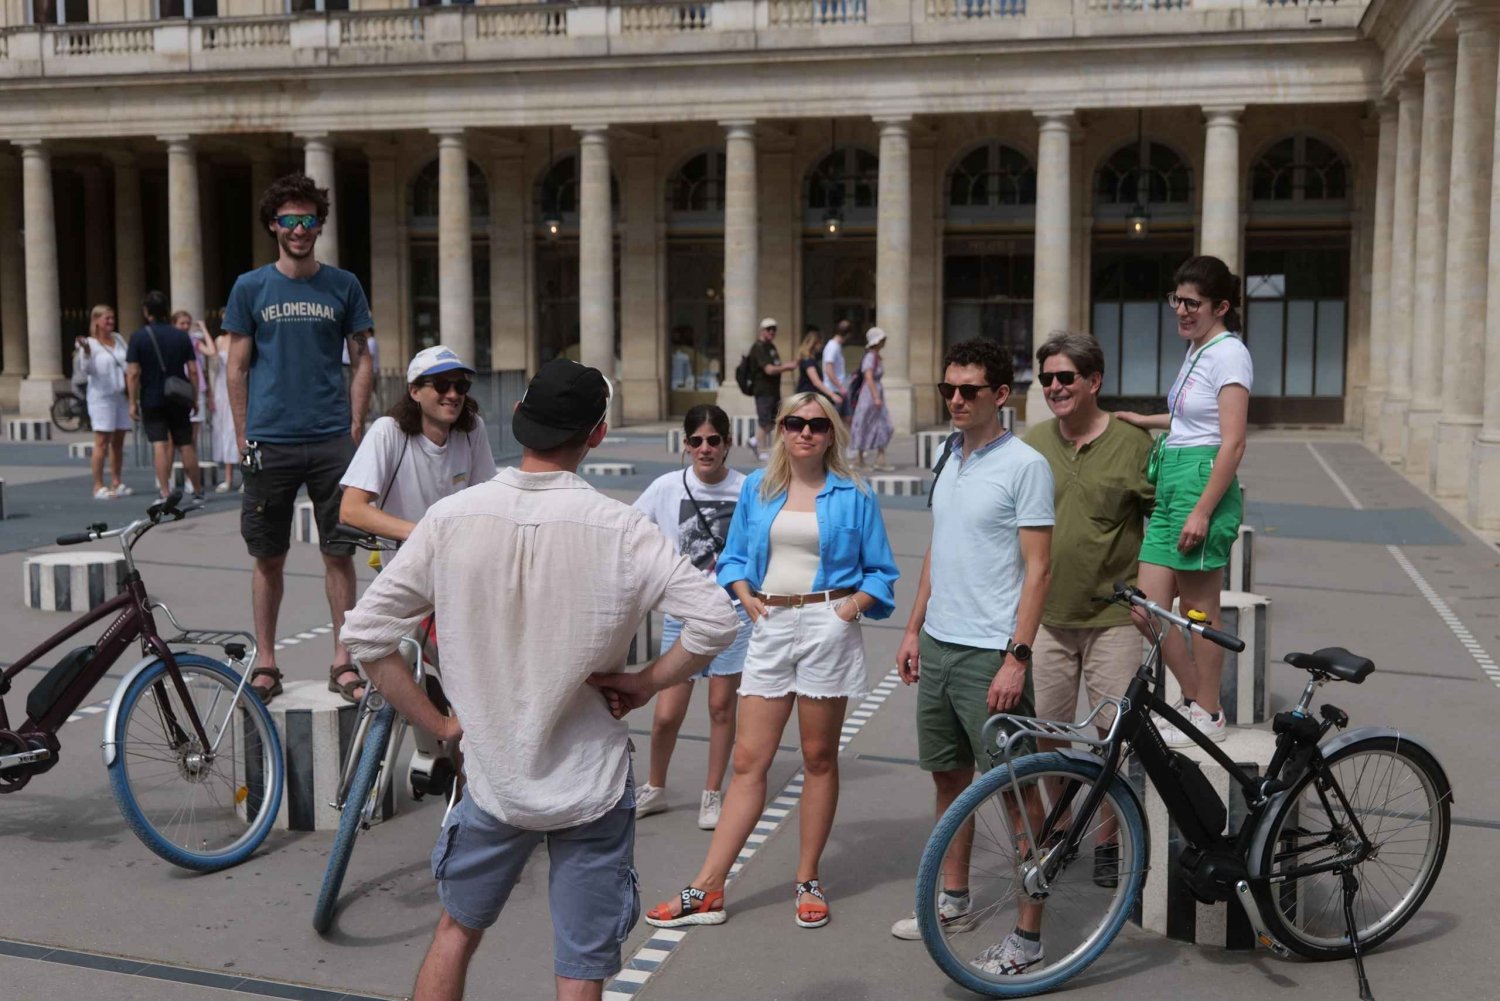 Discover Paris by bike